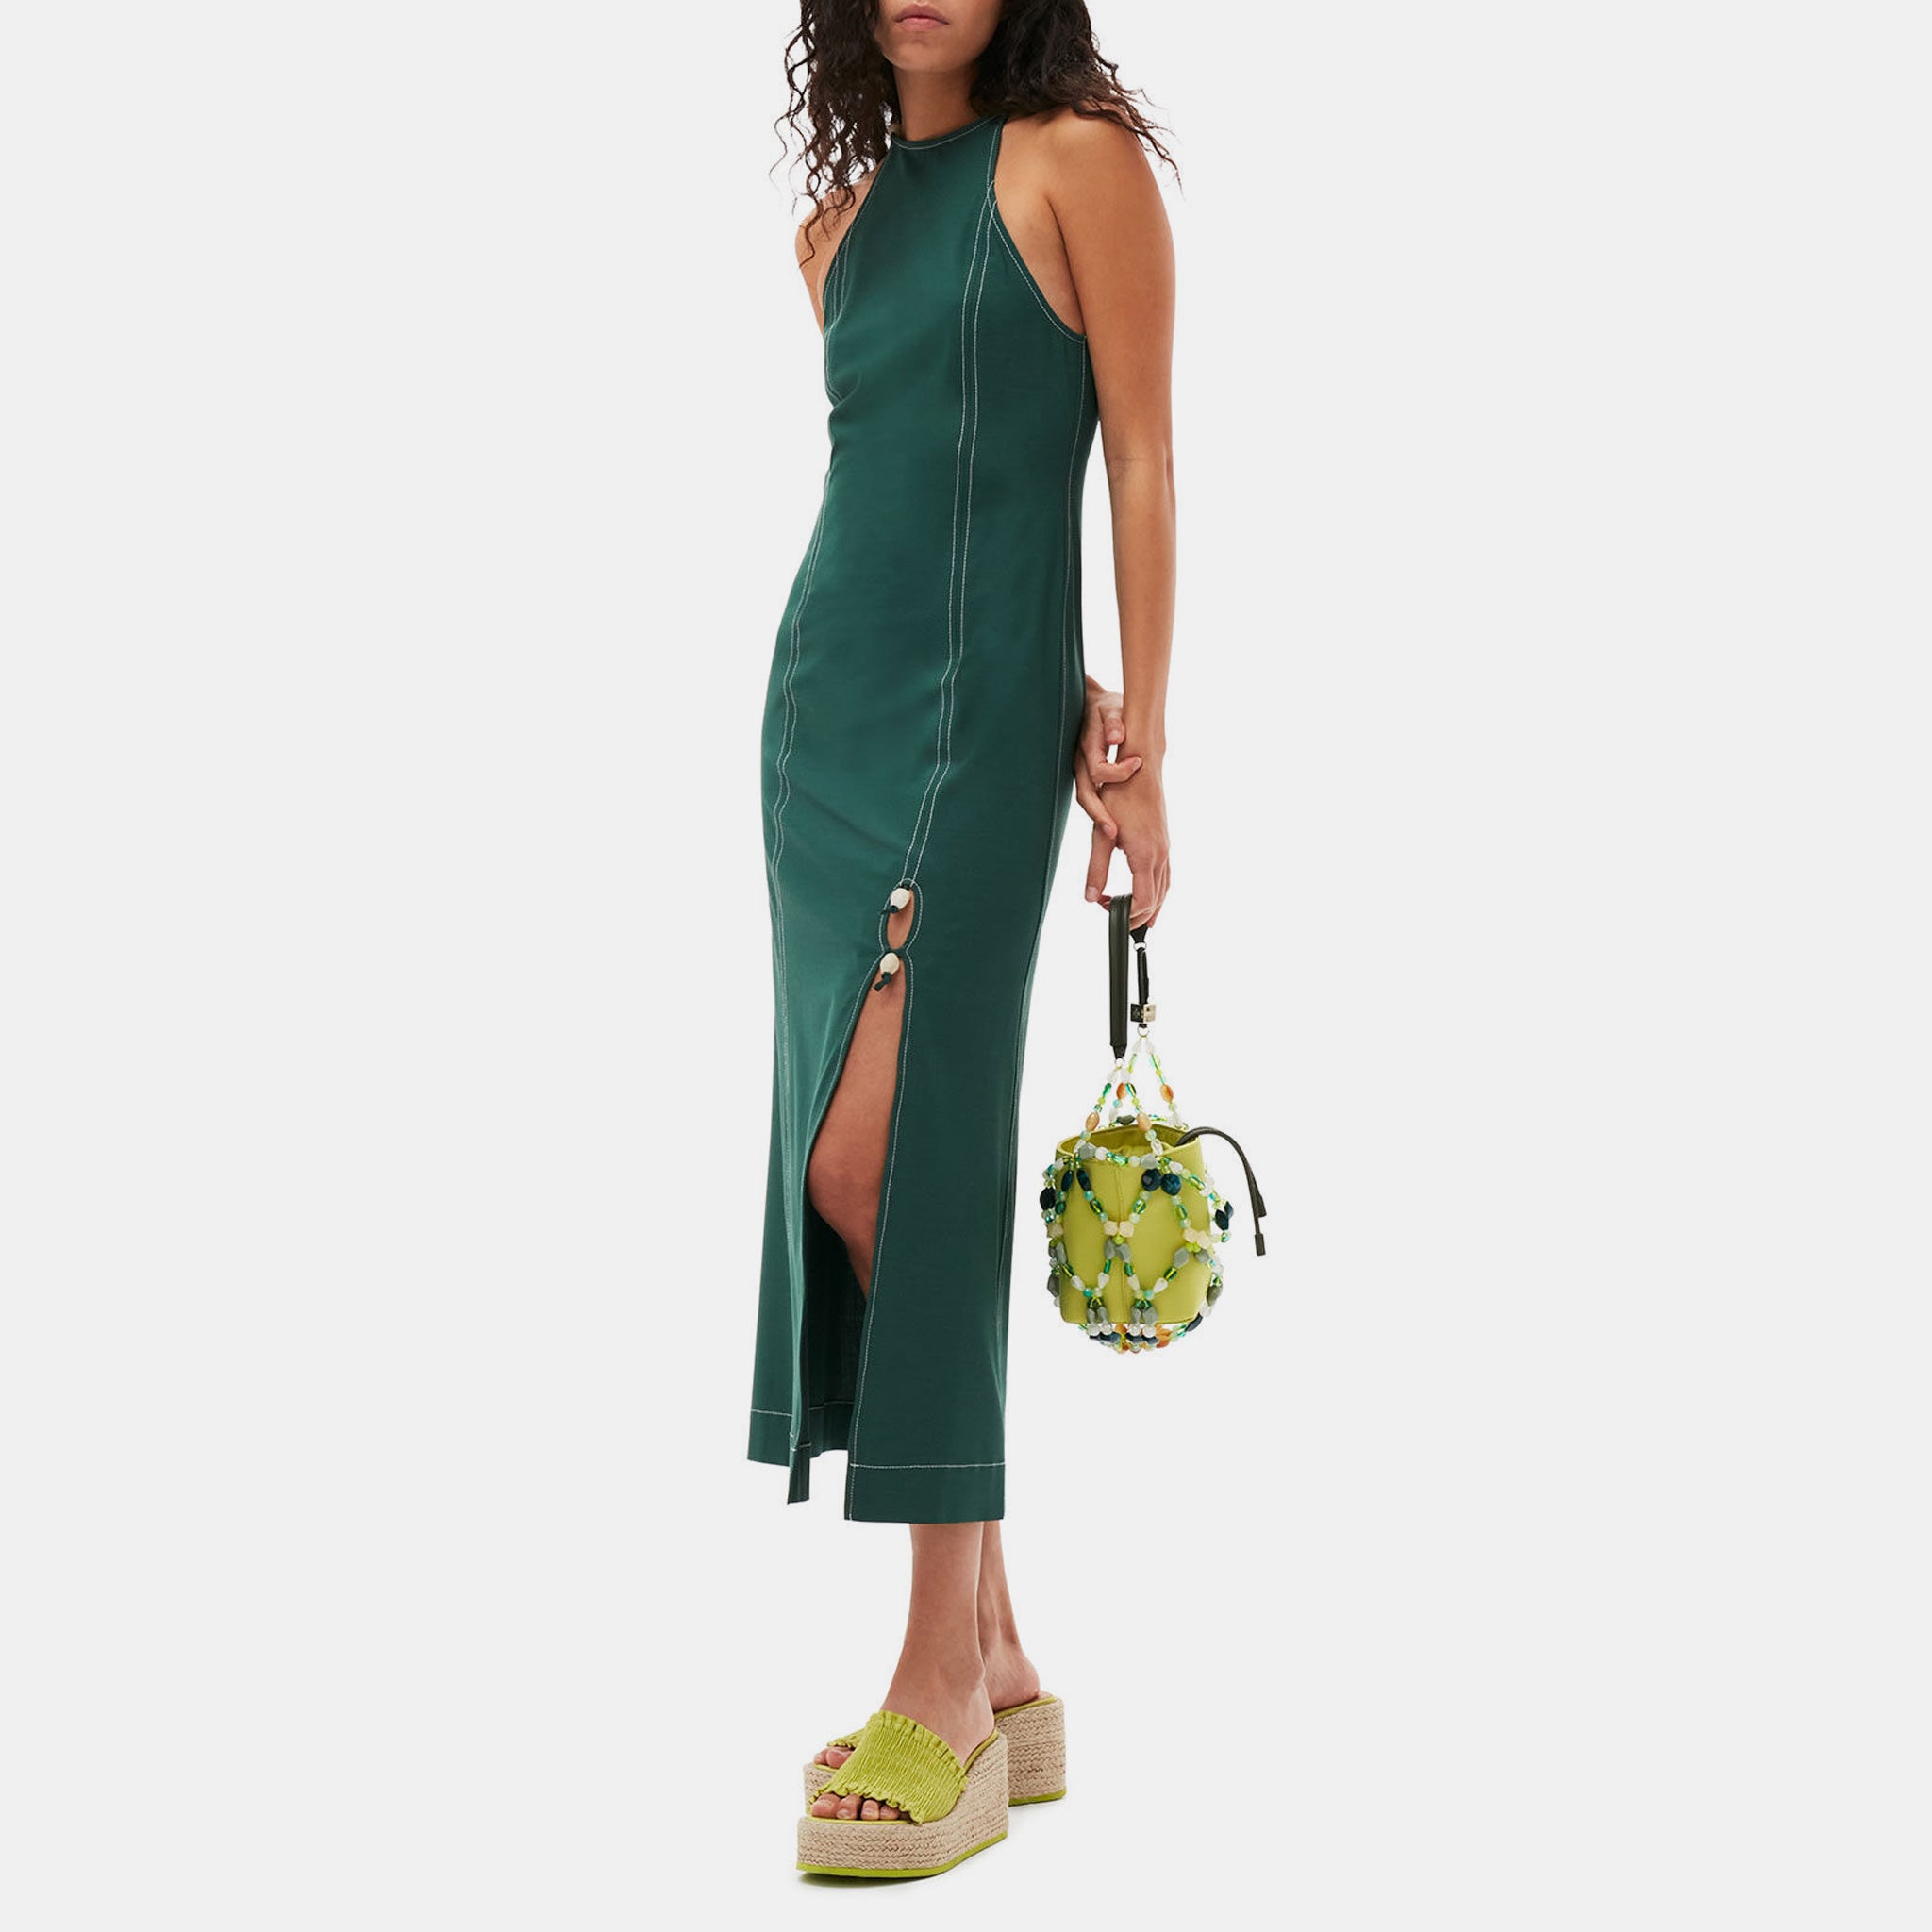 Full body photo of model wearing the Drapey Maxi Dress - Trekking Green.